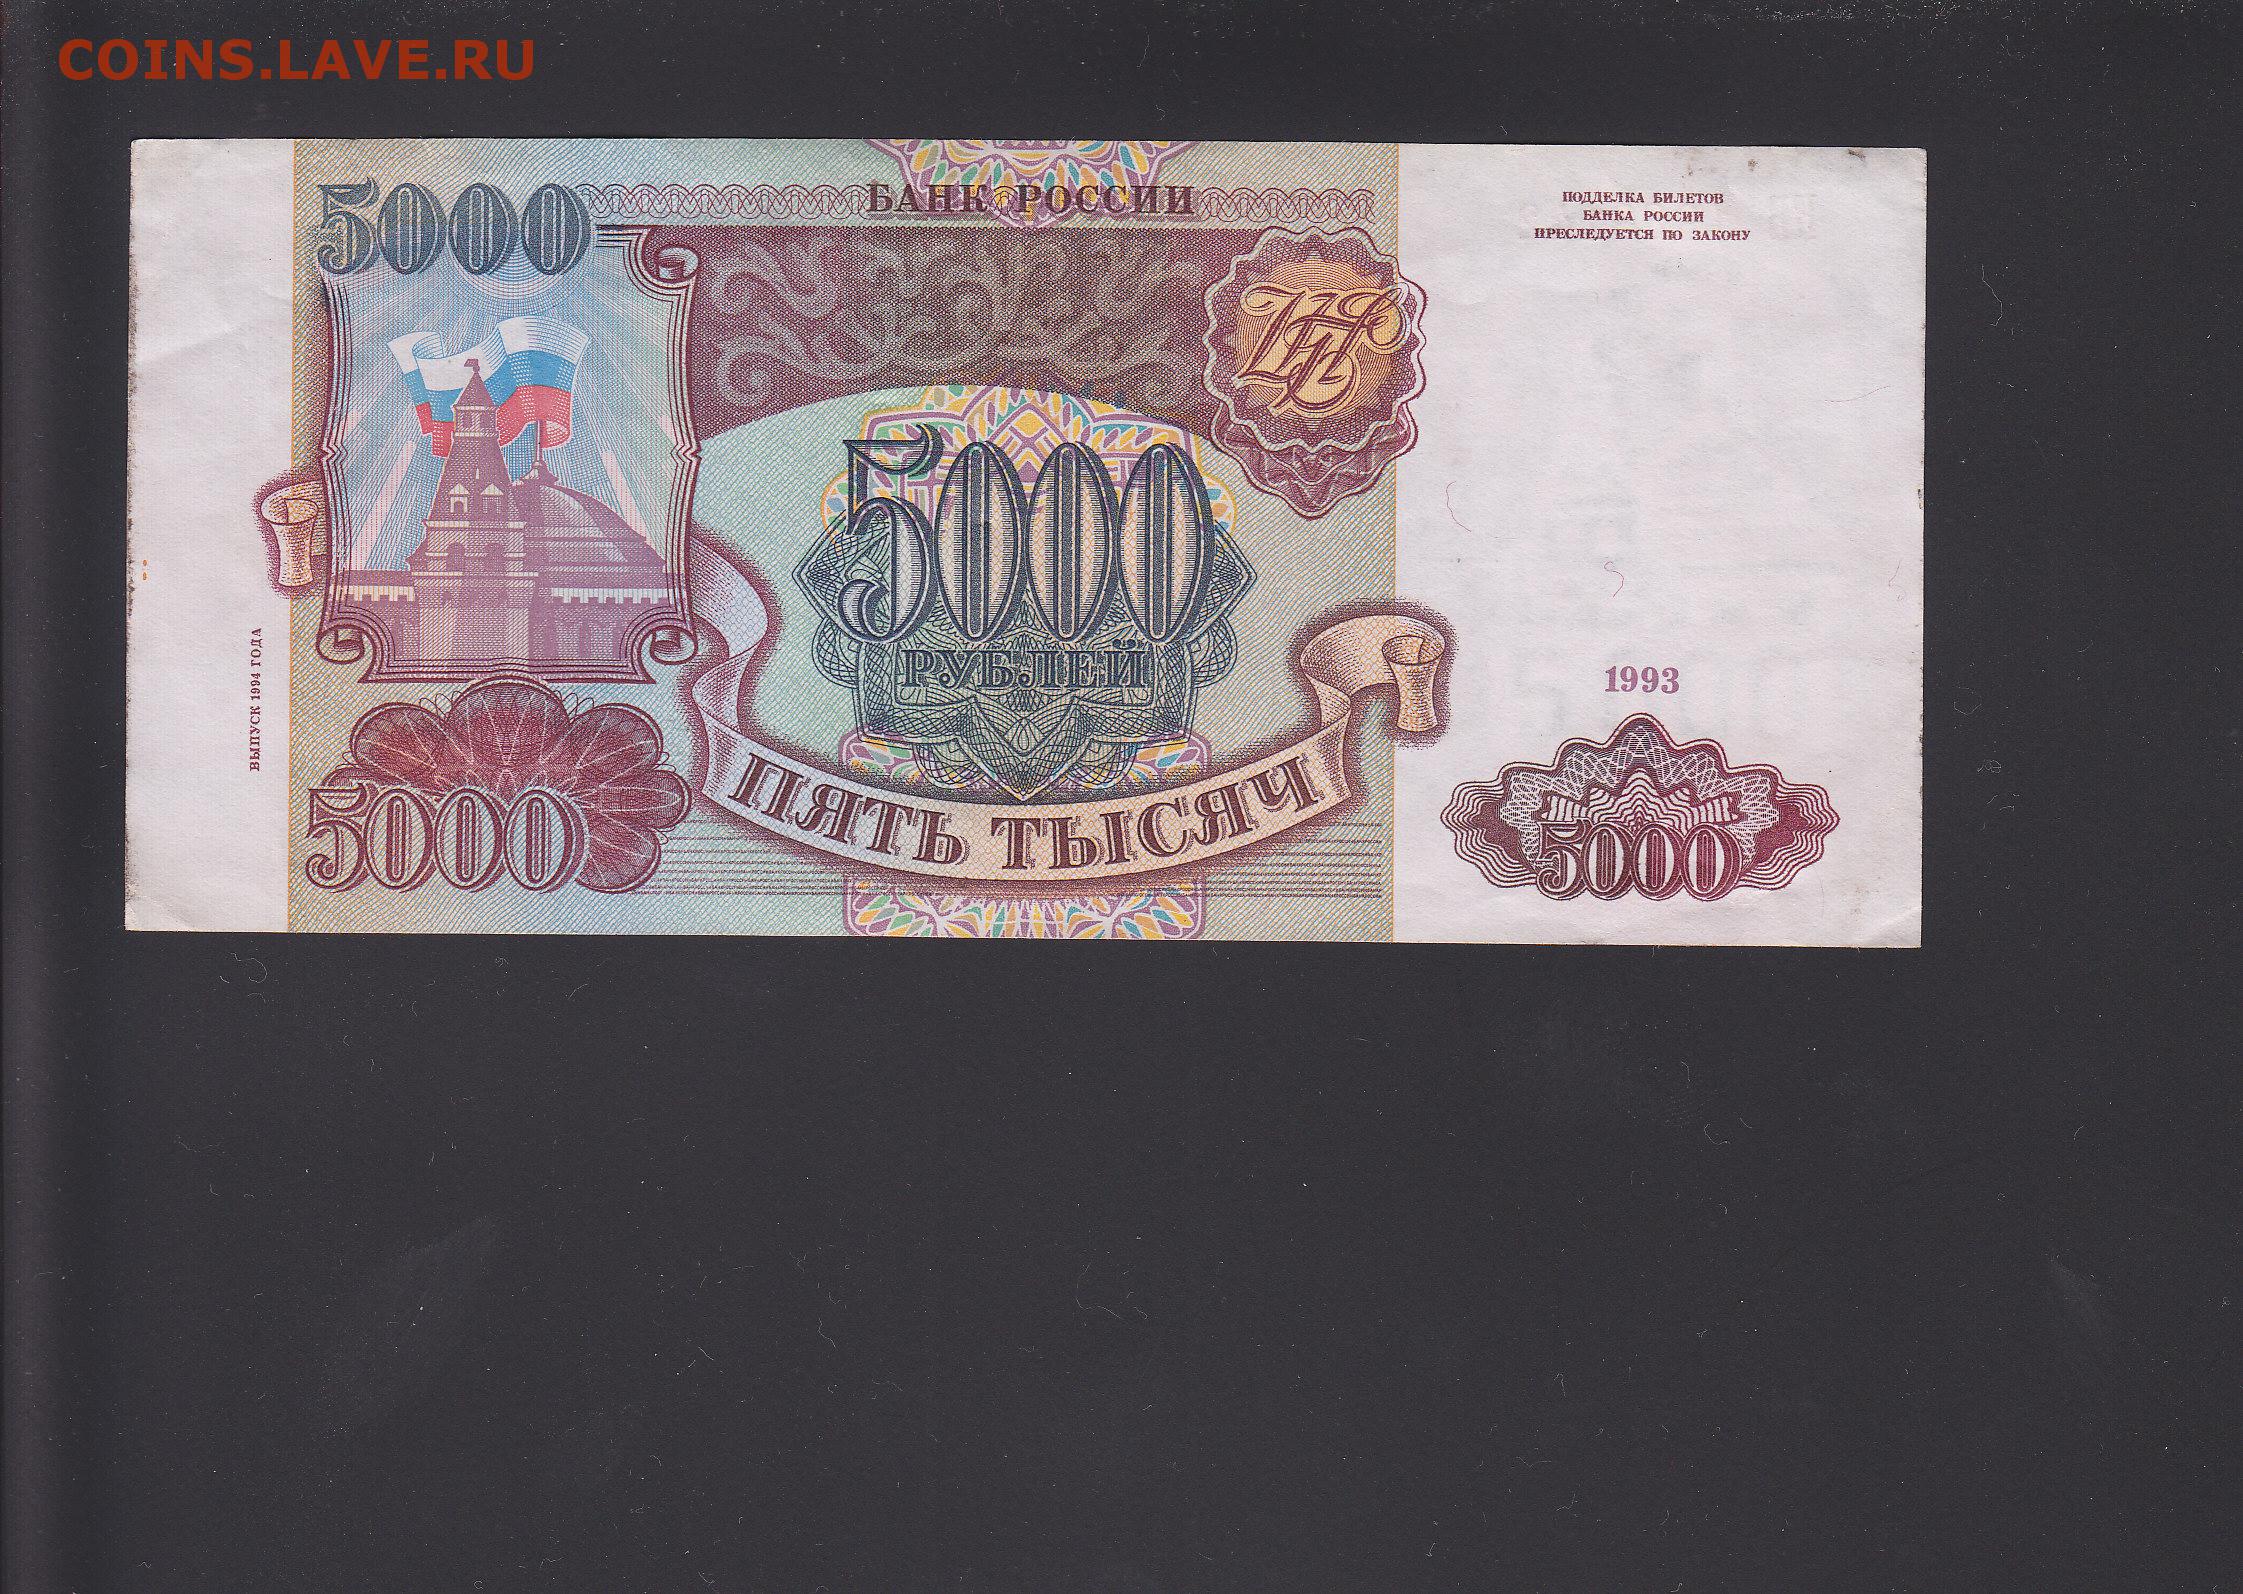 5000 рублей 1993. 5000 Рублей. 5000 Рублей 1993 года. Купюра 5000 1993 года. Купюра 5000 рублей 1993 года.